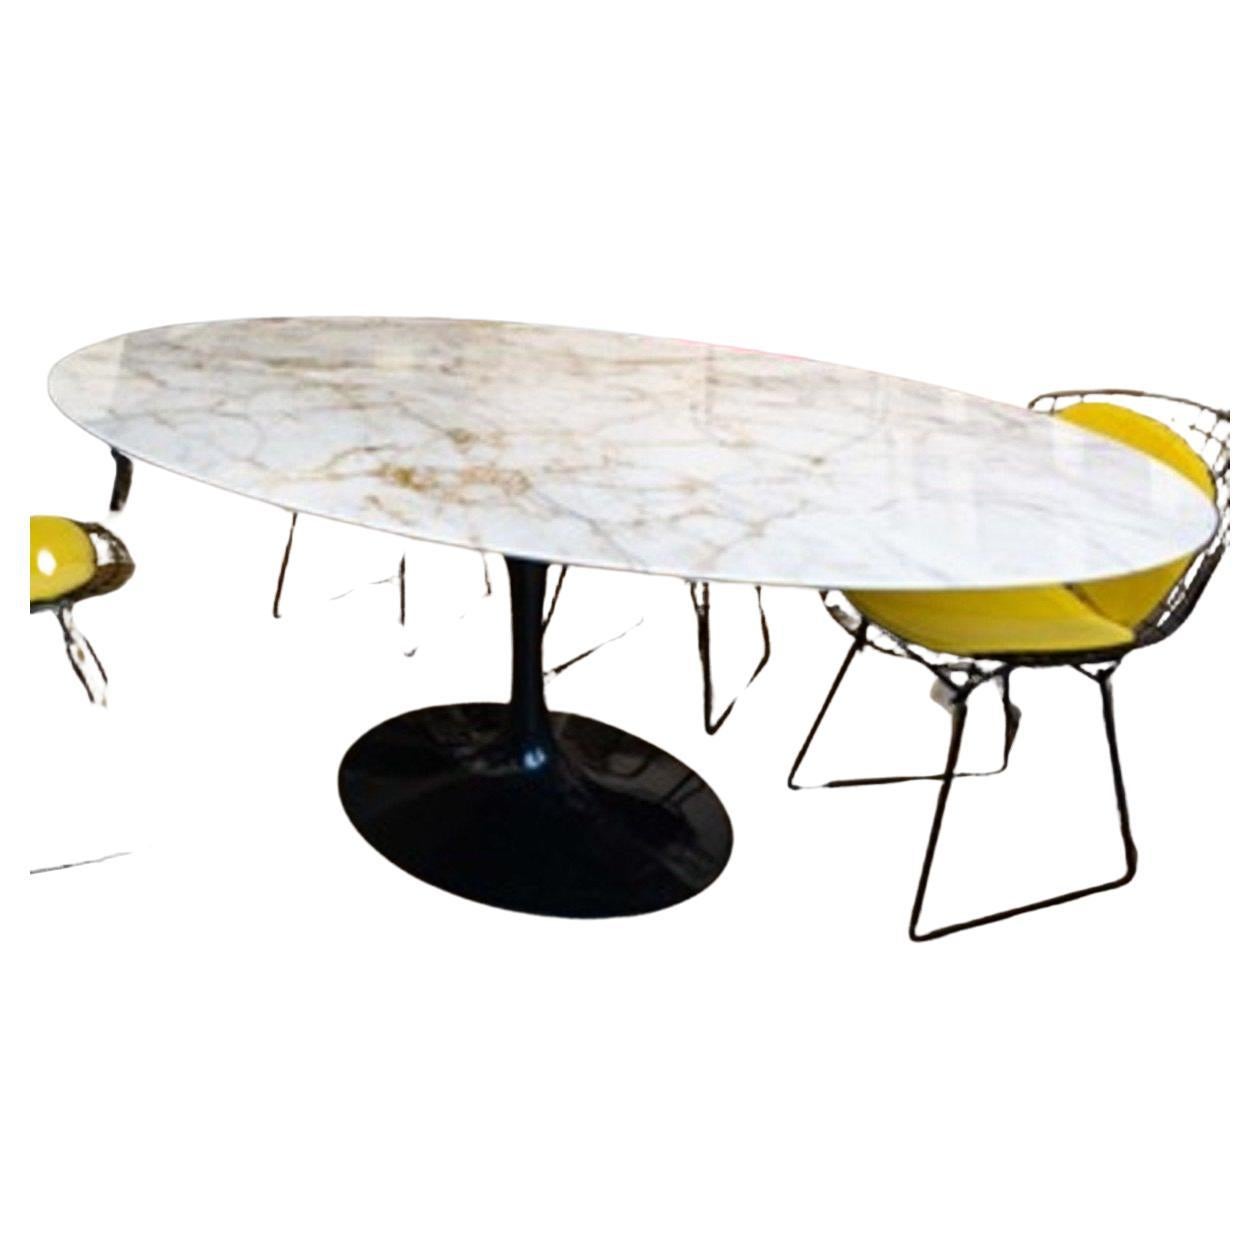 Eero SAARINEN (1910-1961) - Edition KNOLL ,oval table in Calacatta marble 198 cm X 120 cm table model 